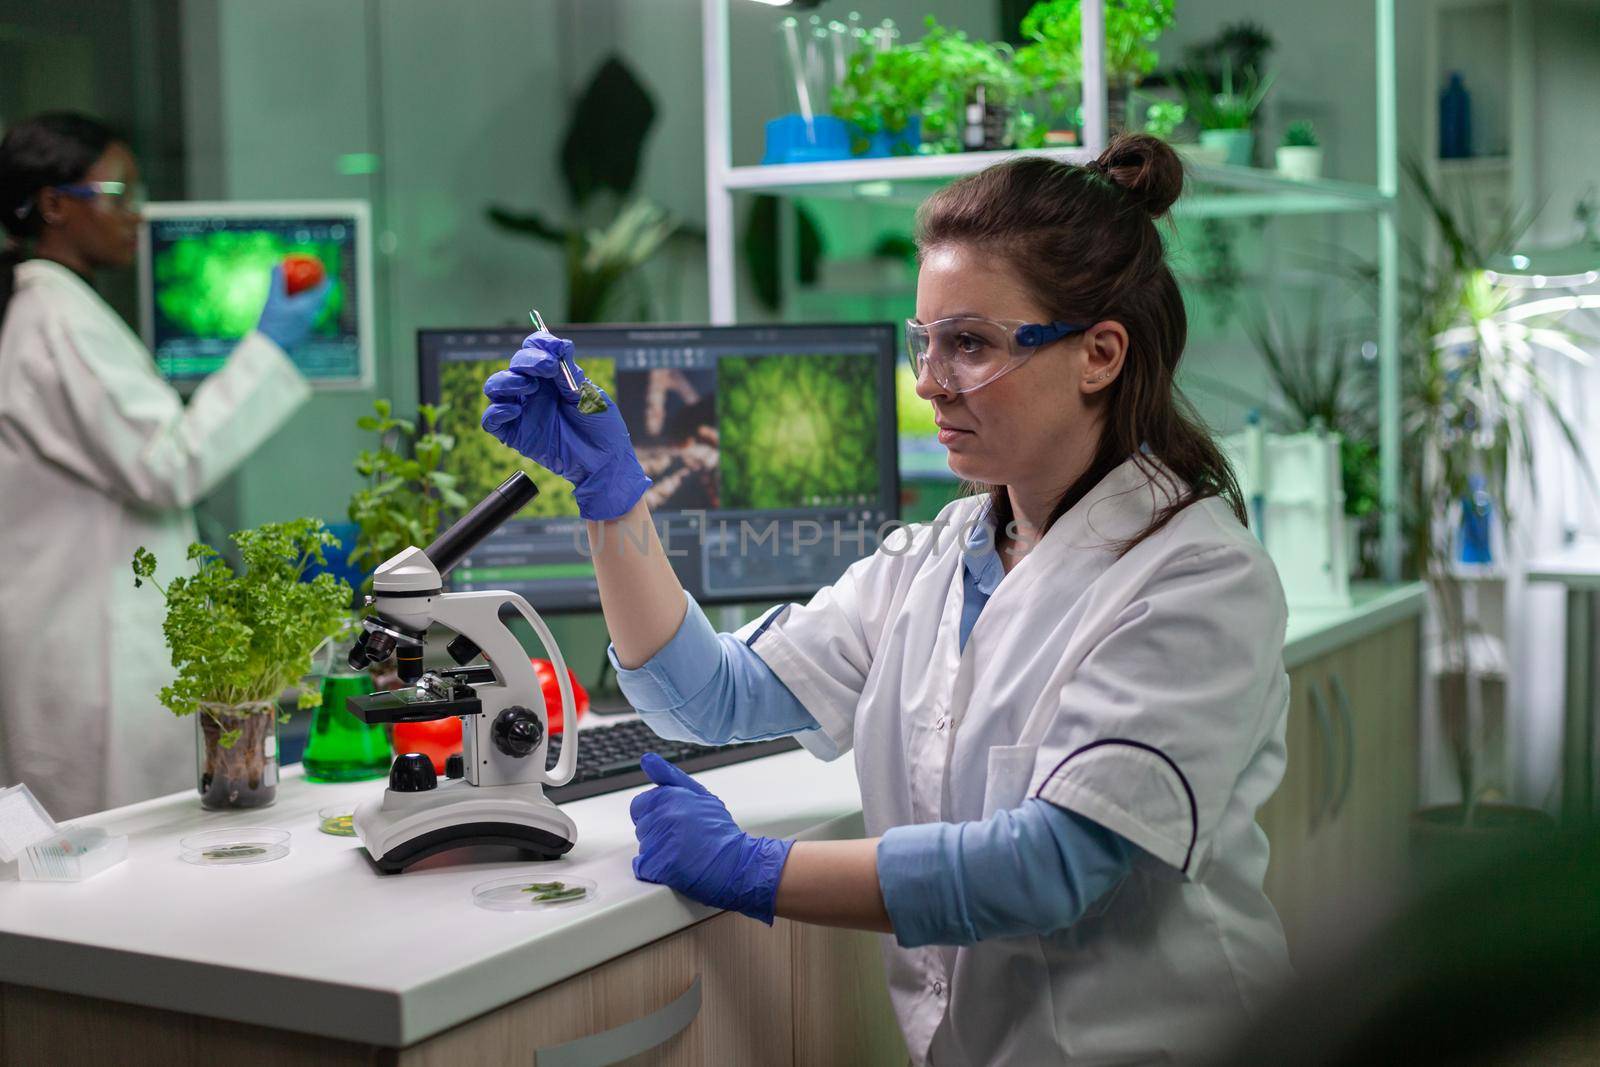 Scientist doctor analyzing botanical plants under microscope by DCStudio